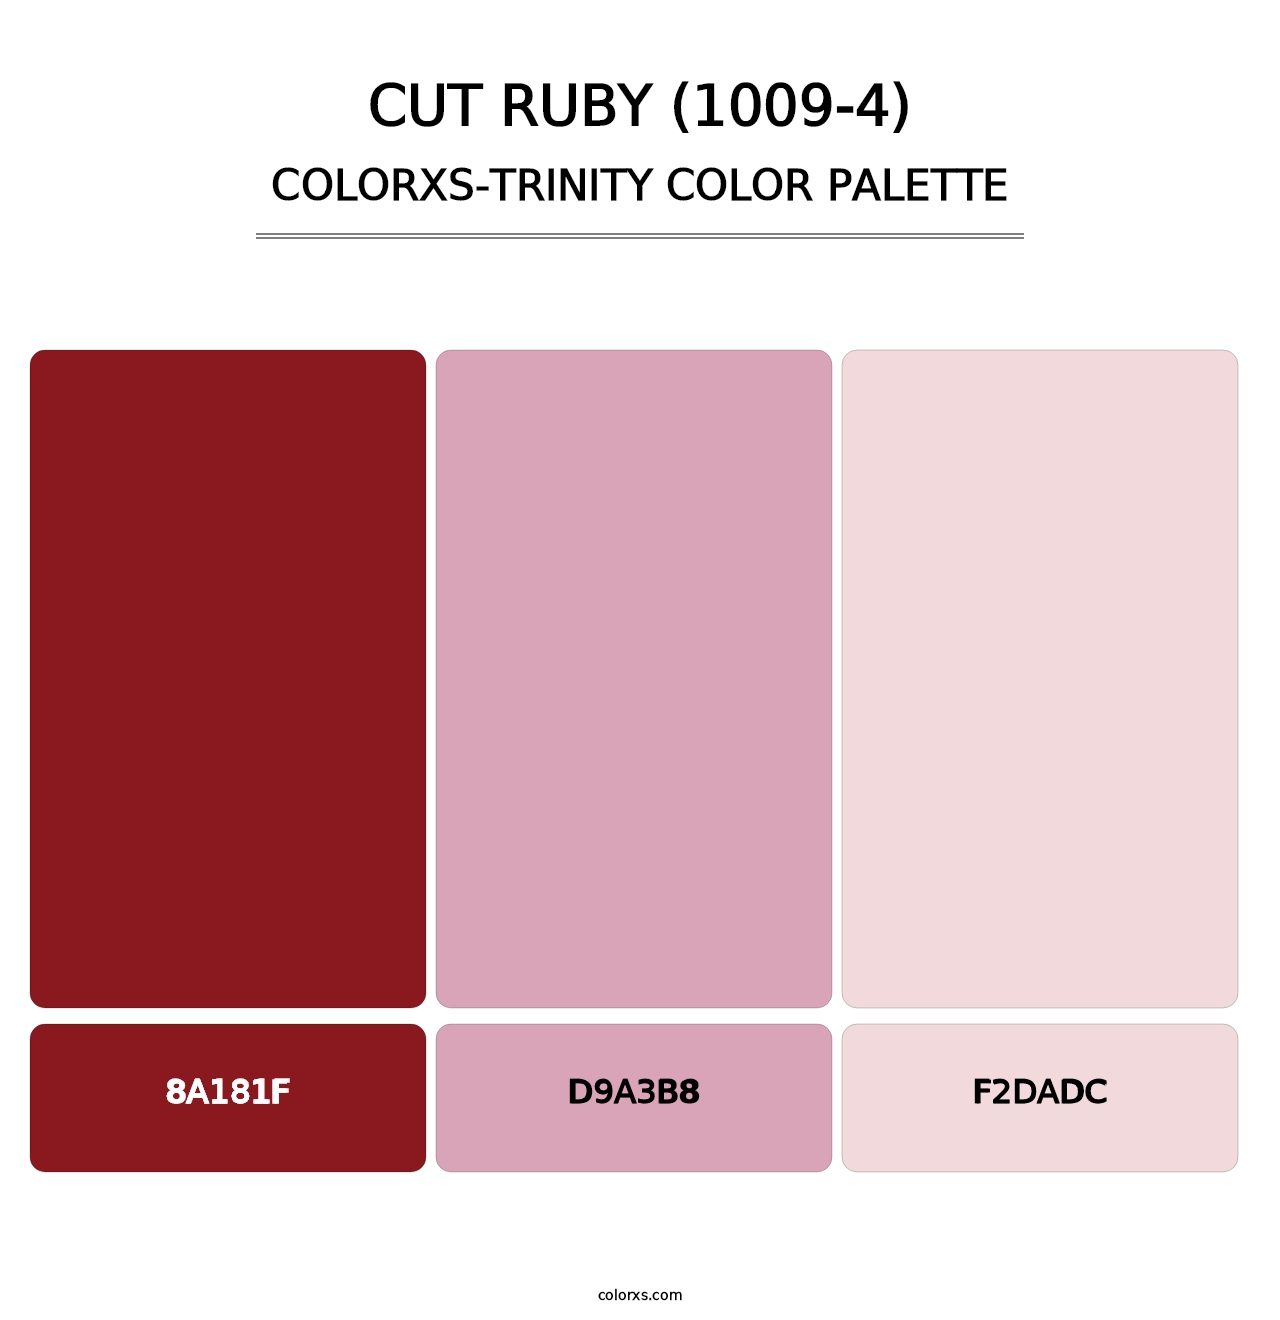 Cut Ruby (1009-4) - Colorxs Trinity Palette